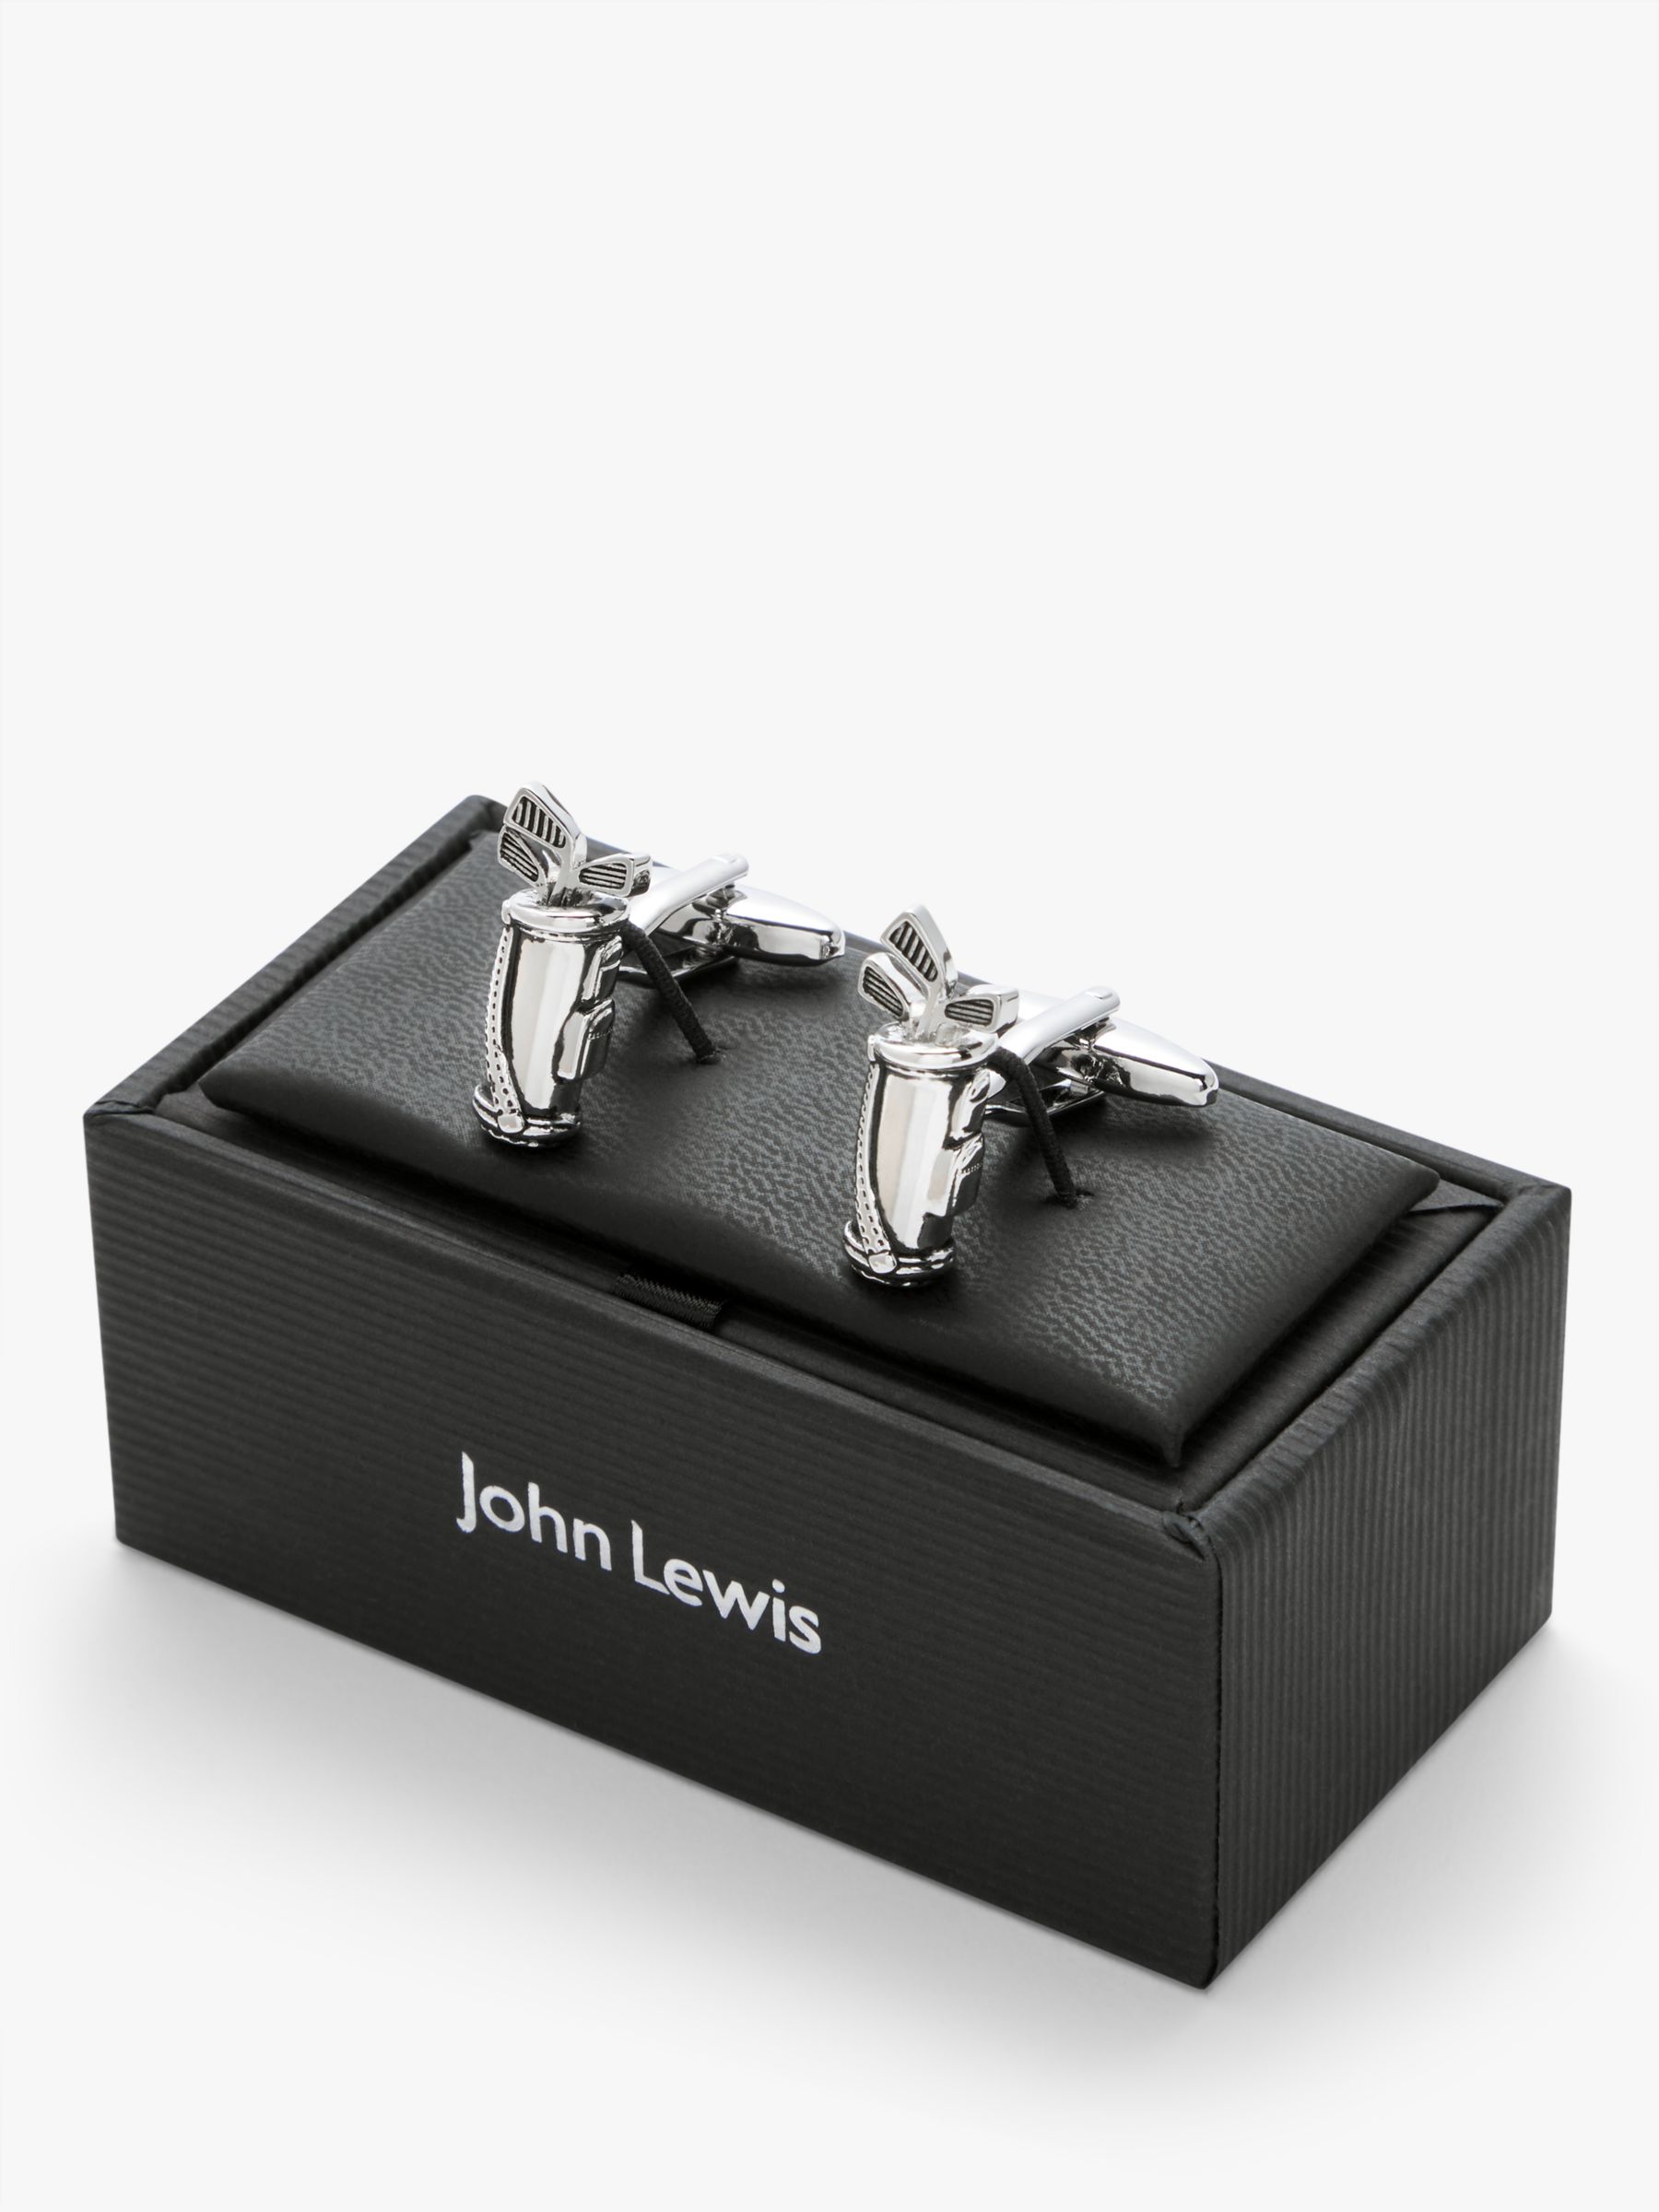 John Lewis Golf Bag Cufflinks, Silver